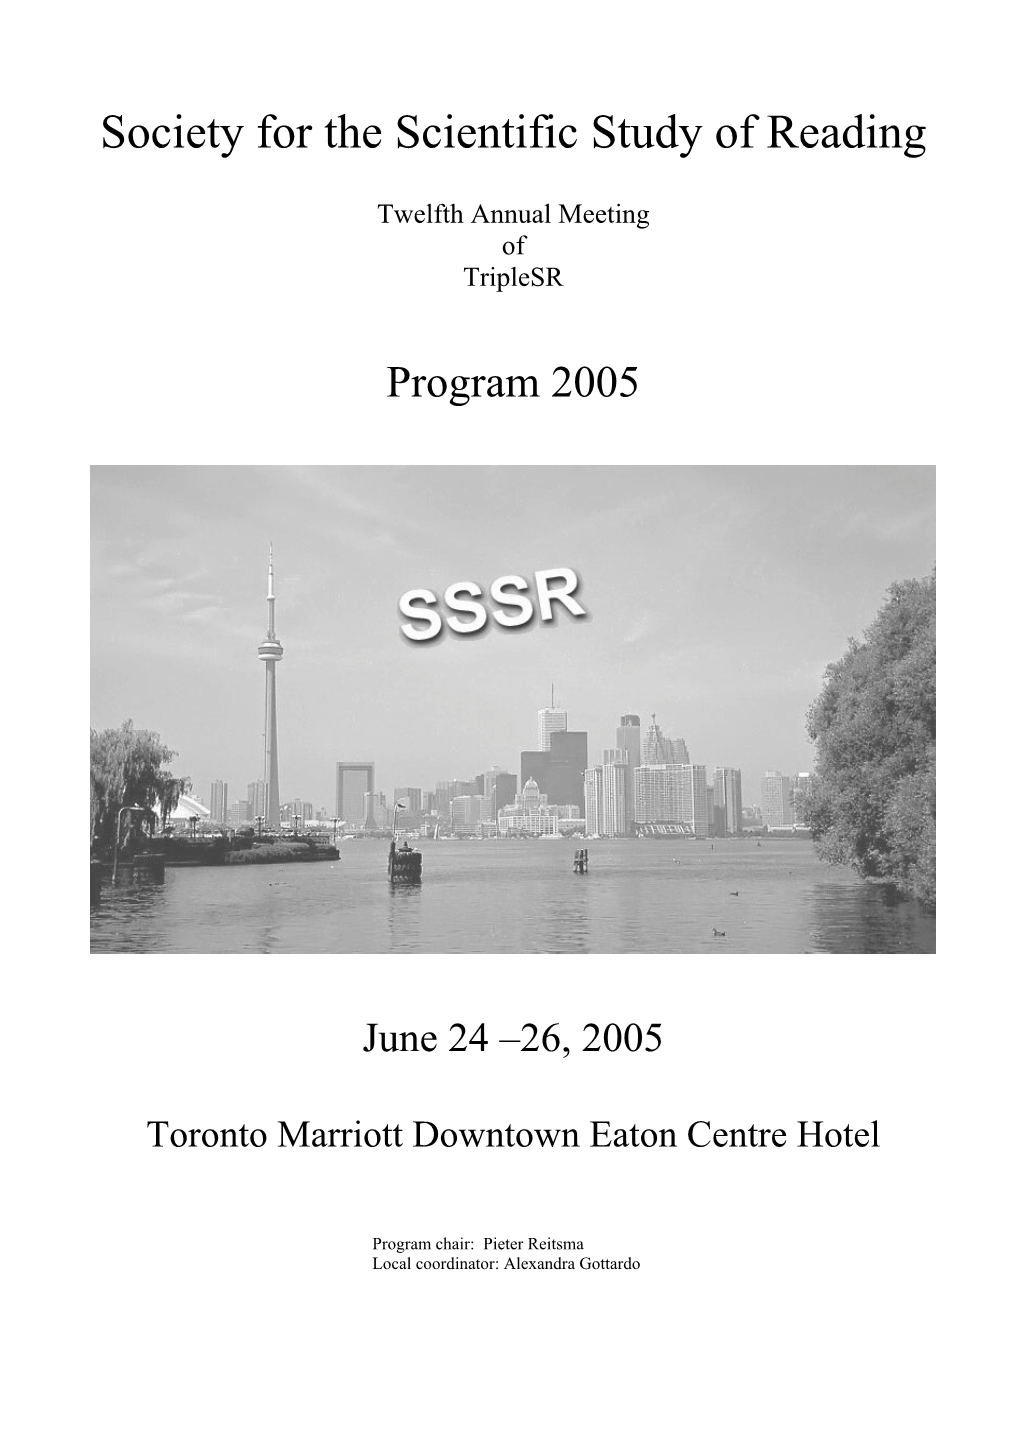 Canada Conference Program (PDF)